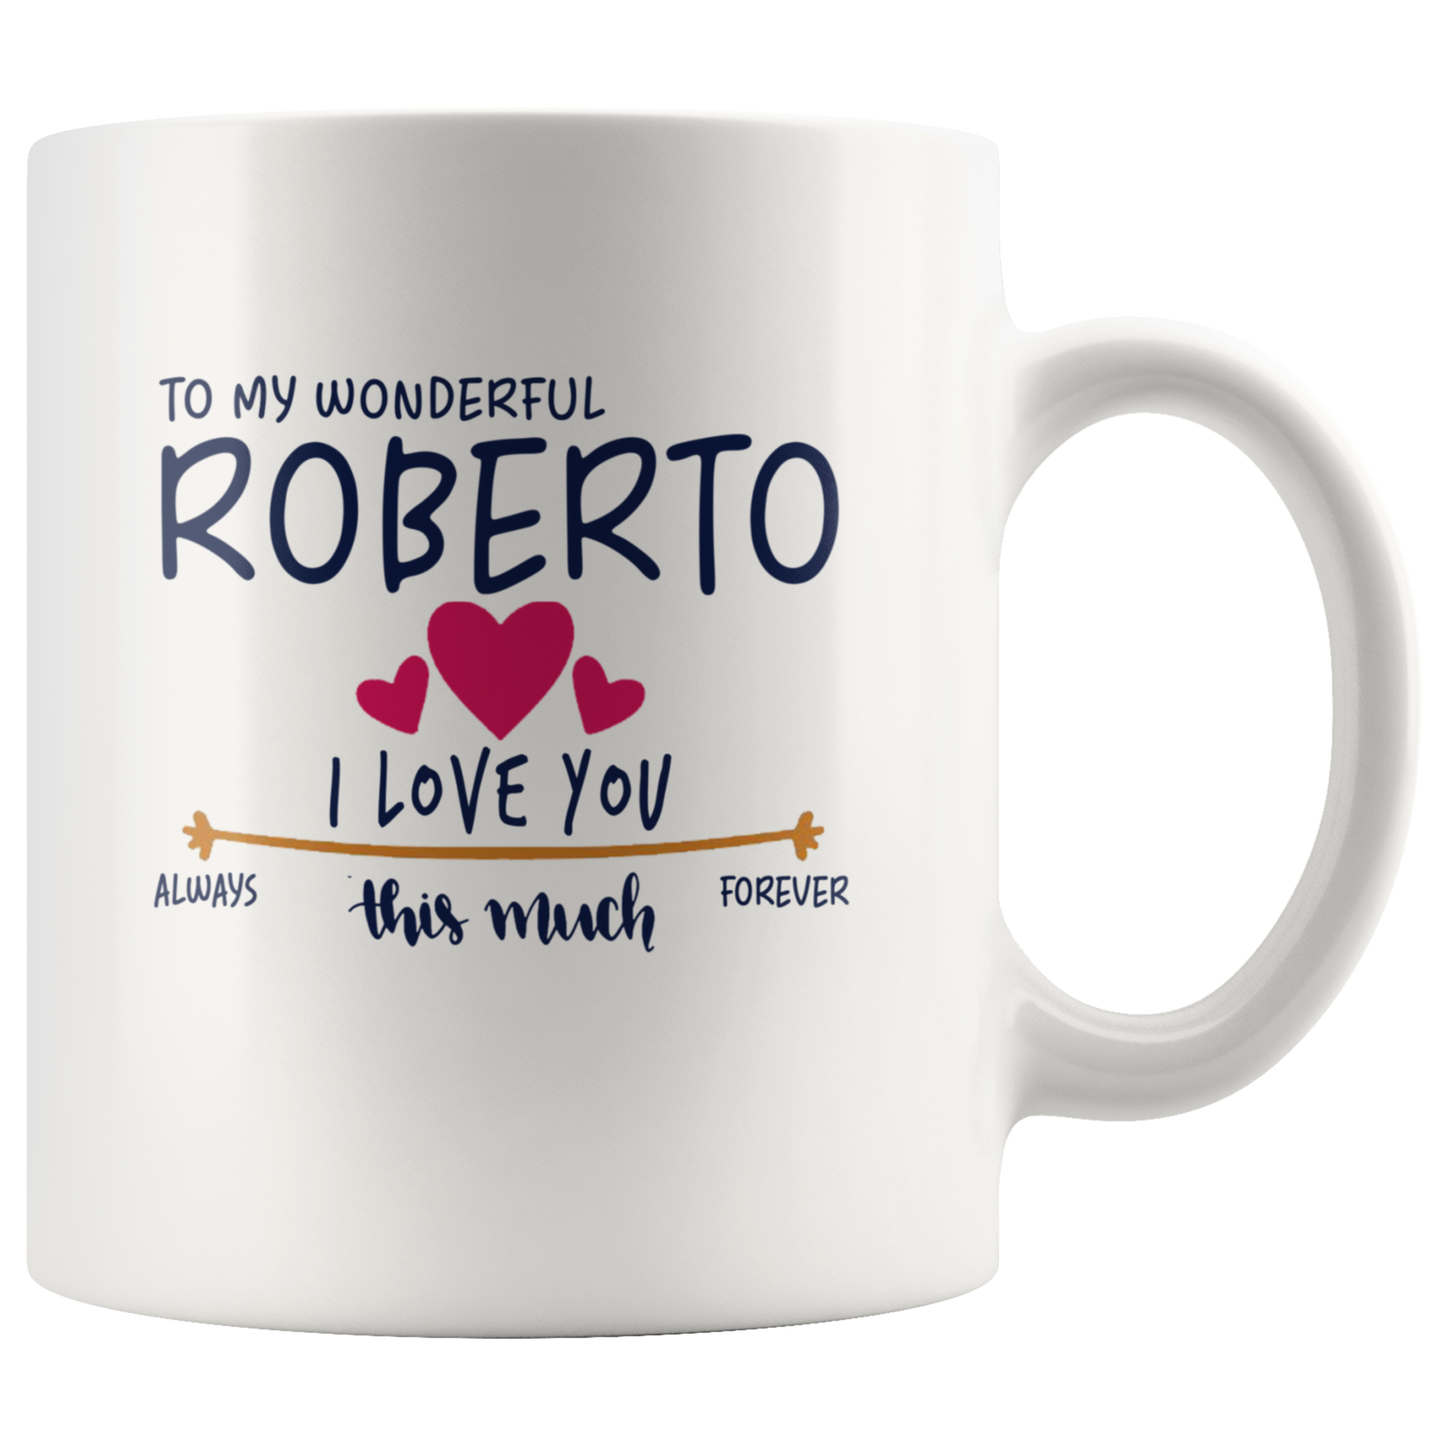 M-21260662-sp-22759 - Valentines Day Coffee Mug With Name Roberto - To My Wonderfu